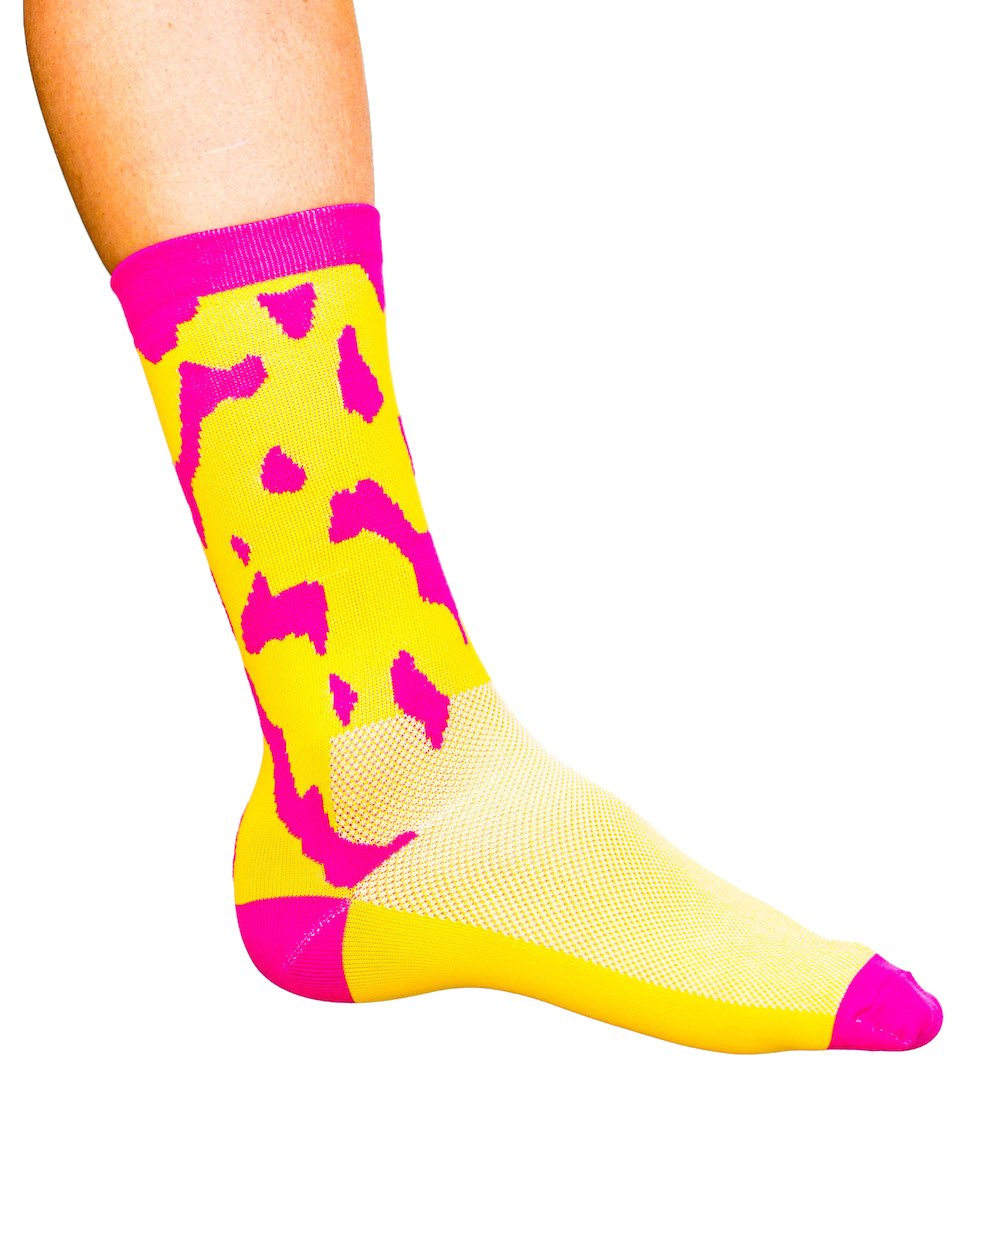 Pink Blot cycling socks by Cosmic Socks